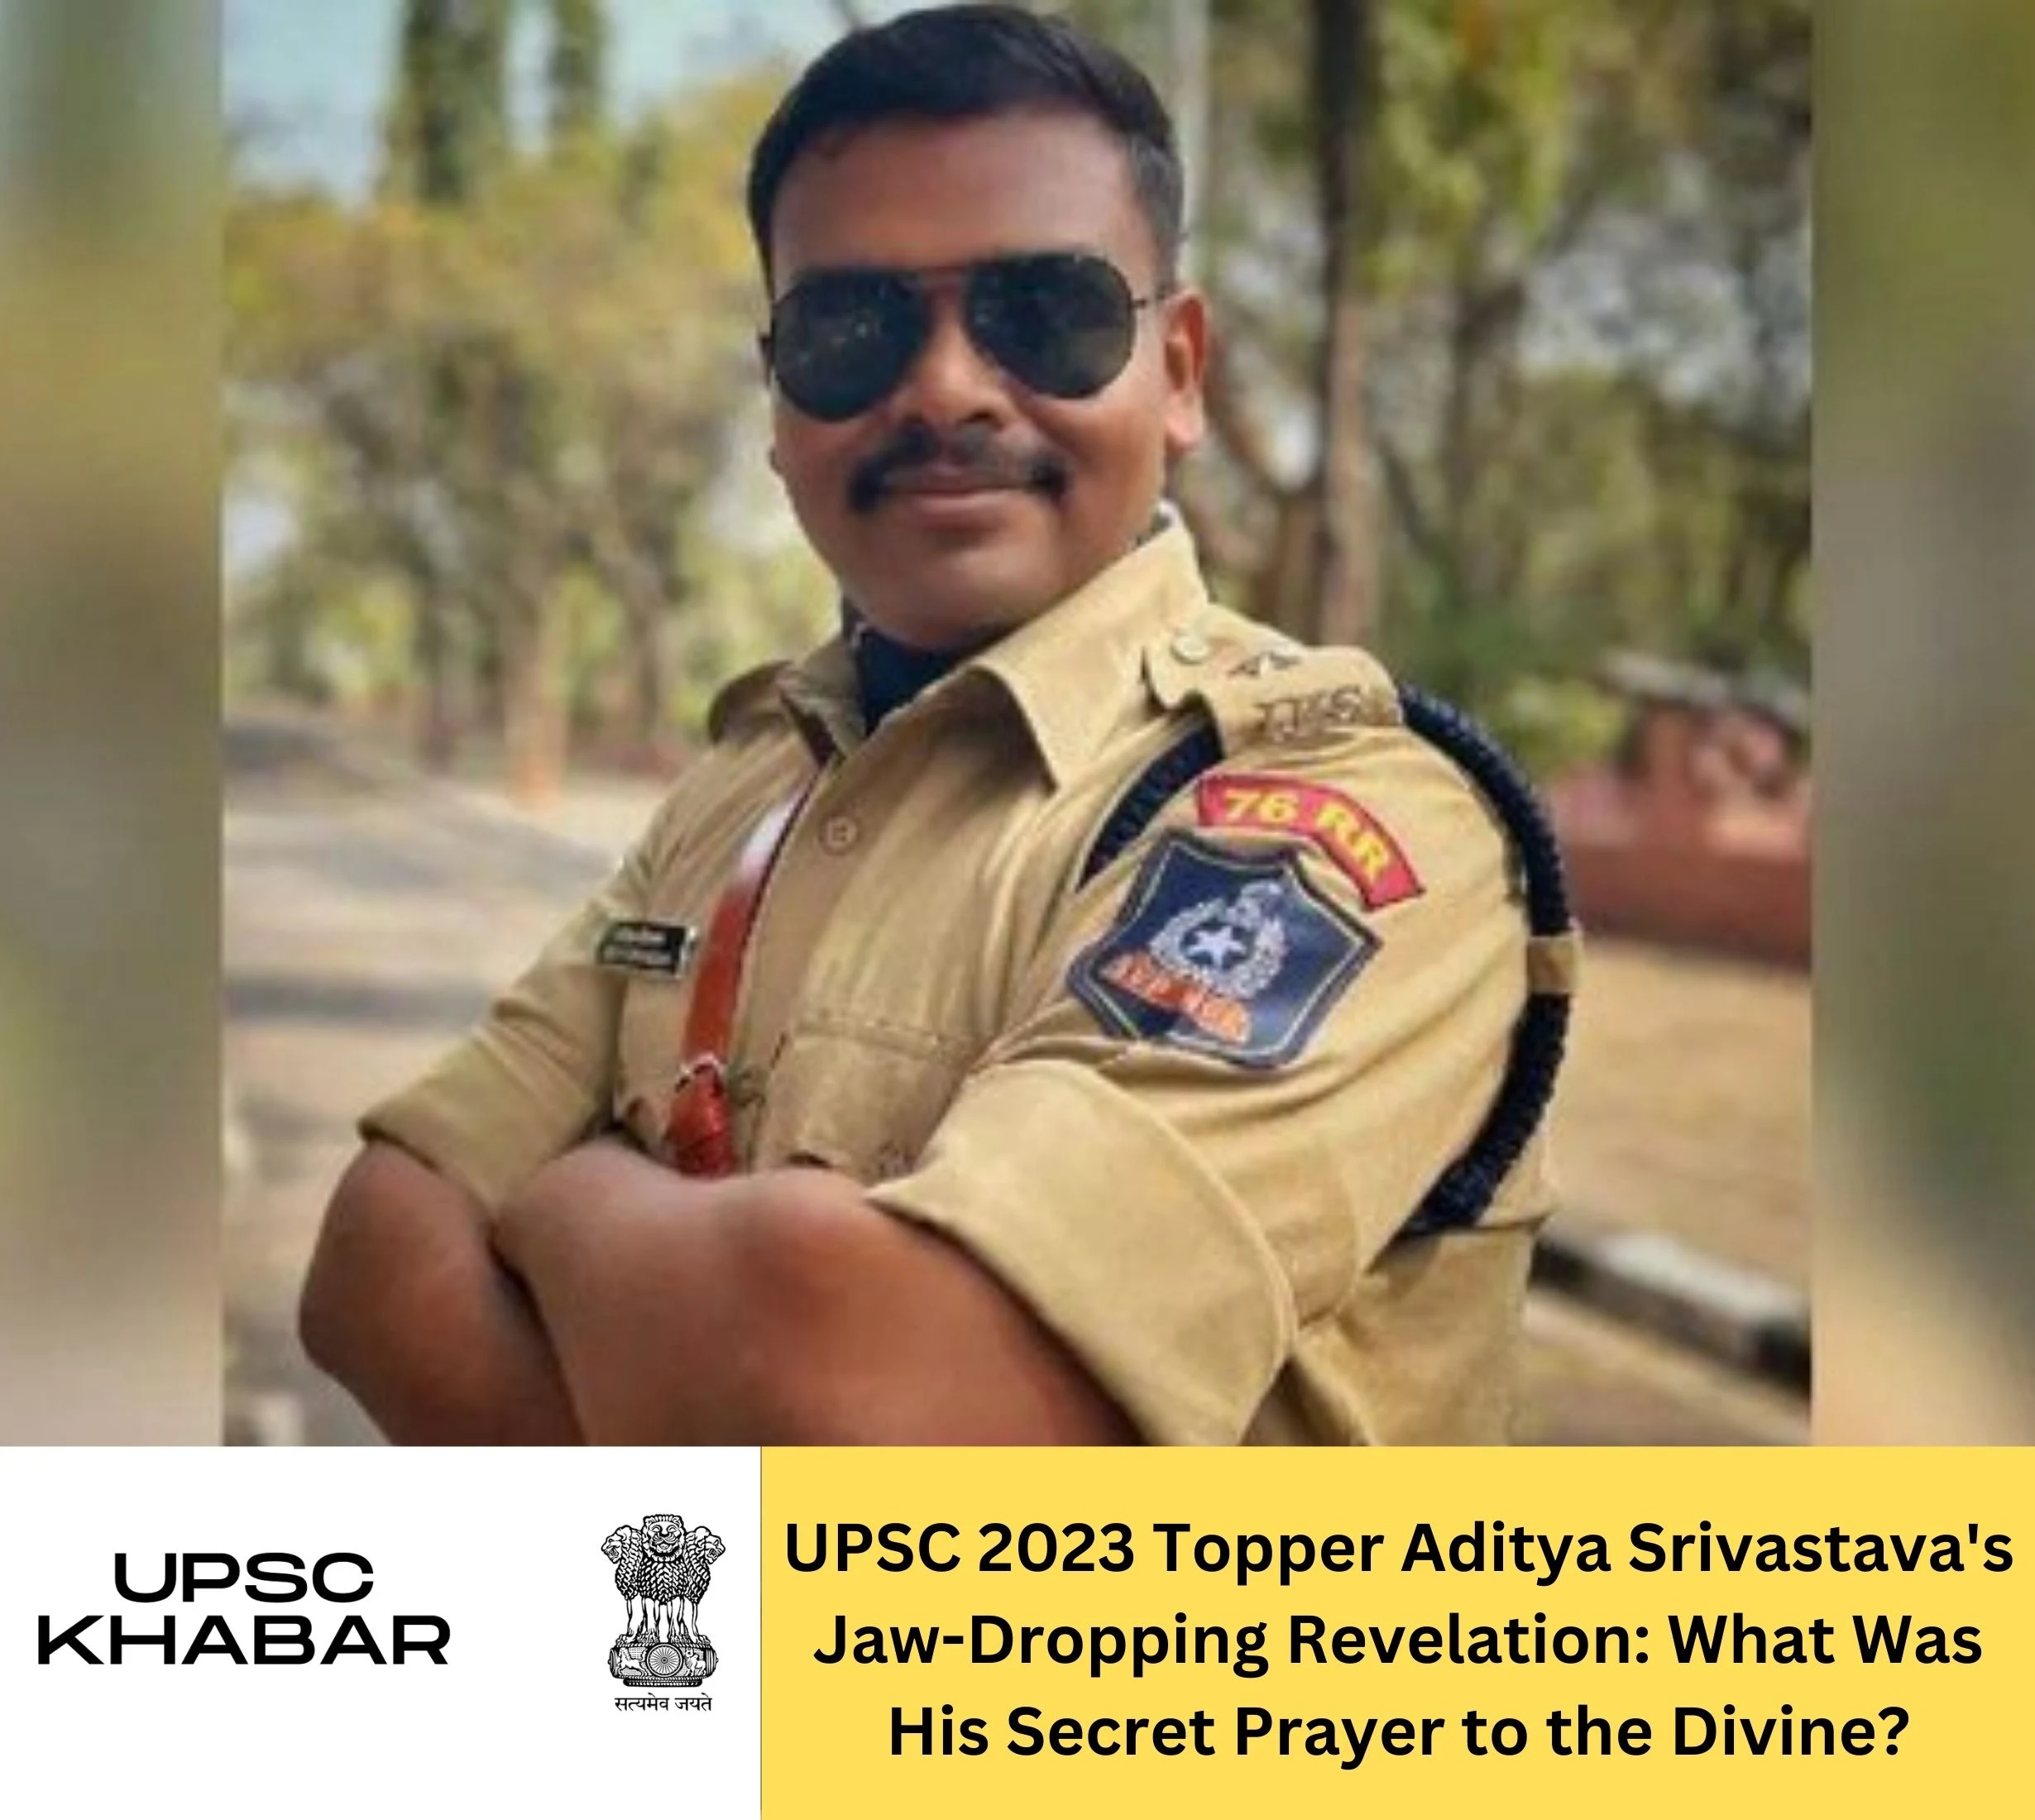 UPSC 2023 Topper Aditya Srivastava's Jaw-Dropping Revelation: What Was His Secret Prayer to the Divine?